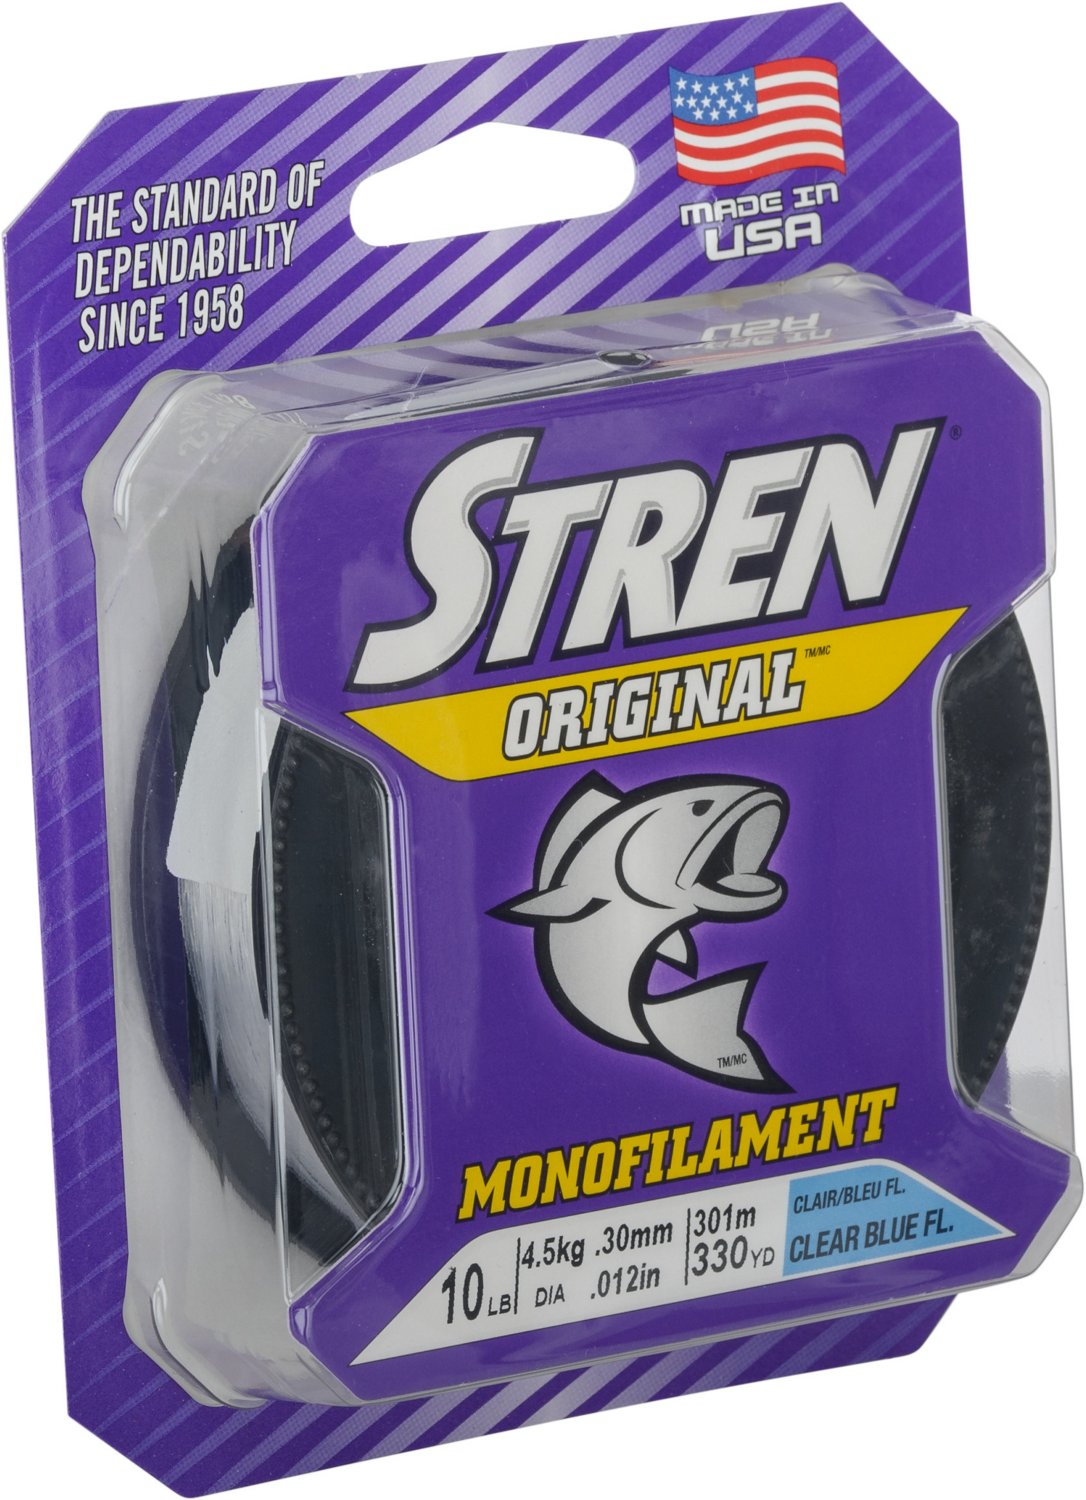 Stren Original Monofilament Line